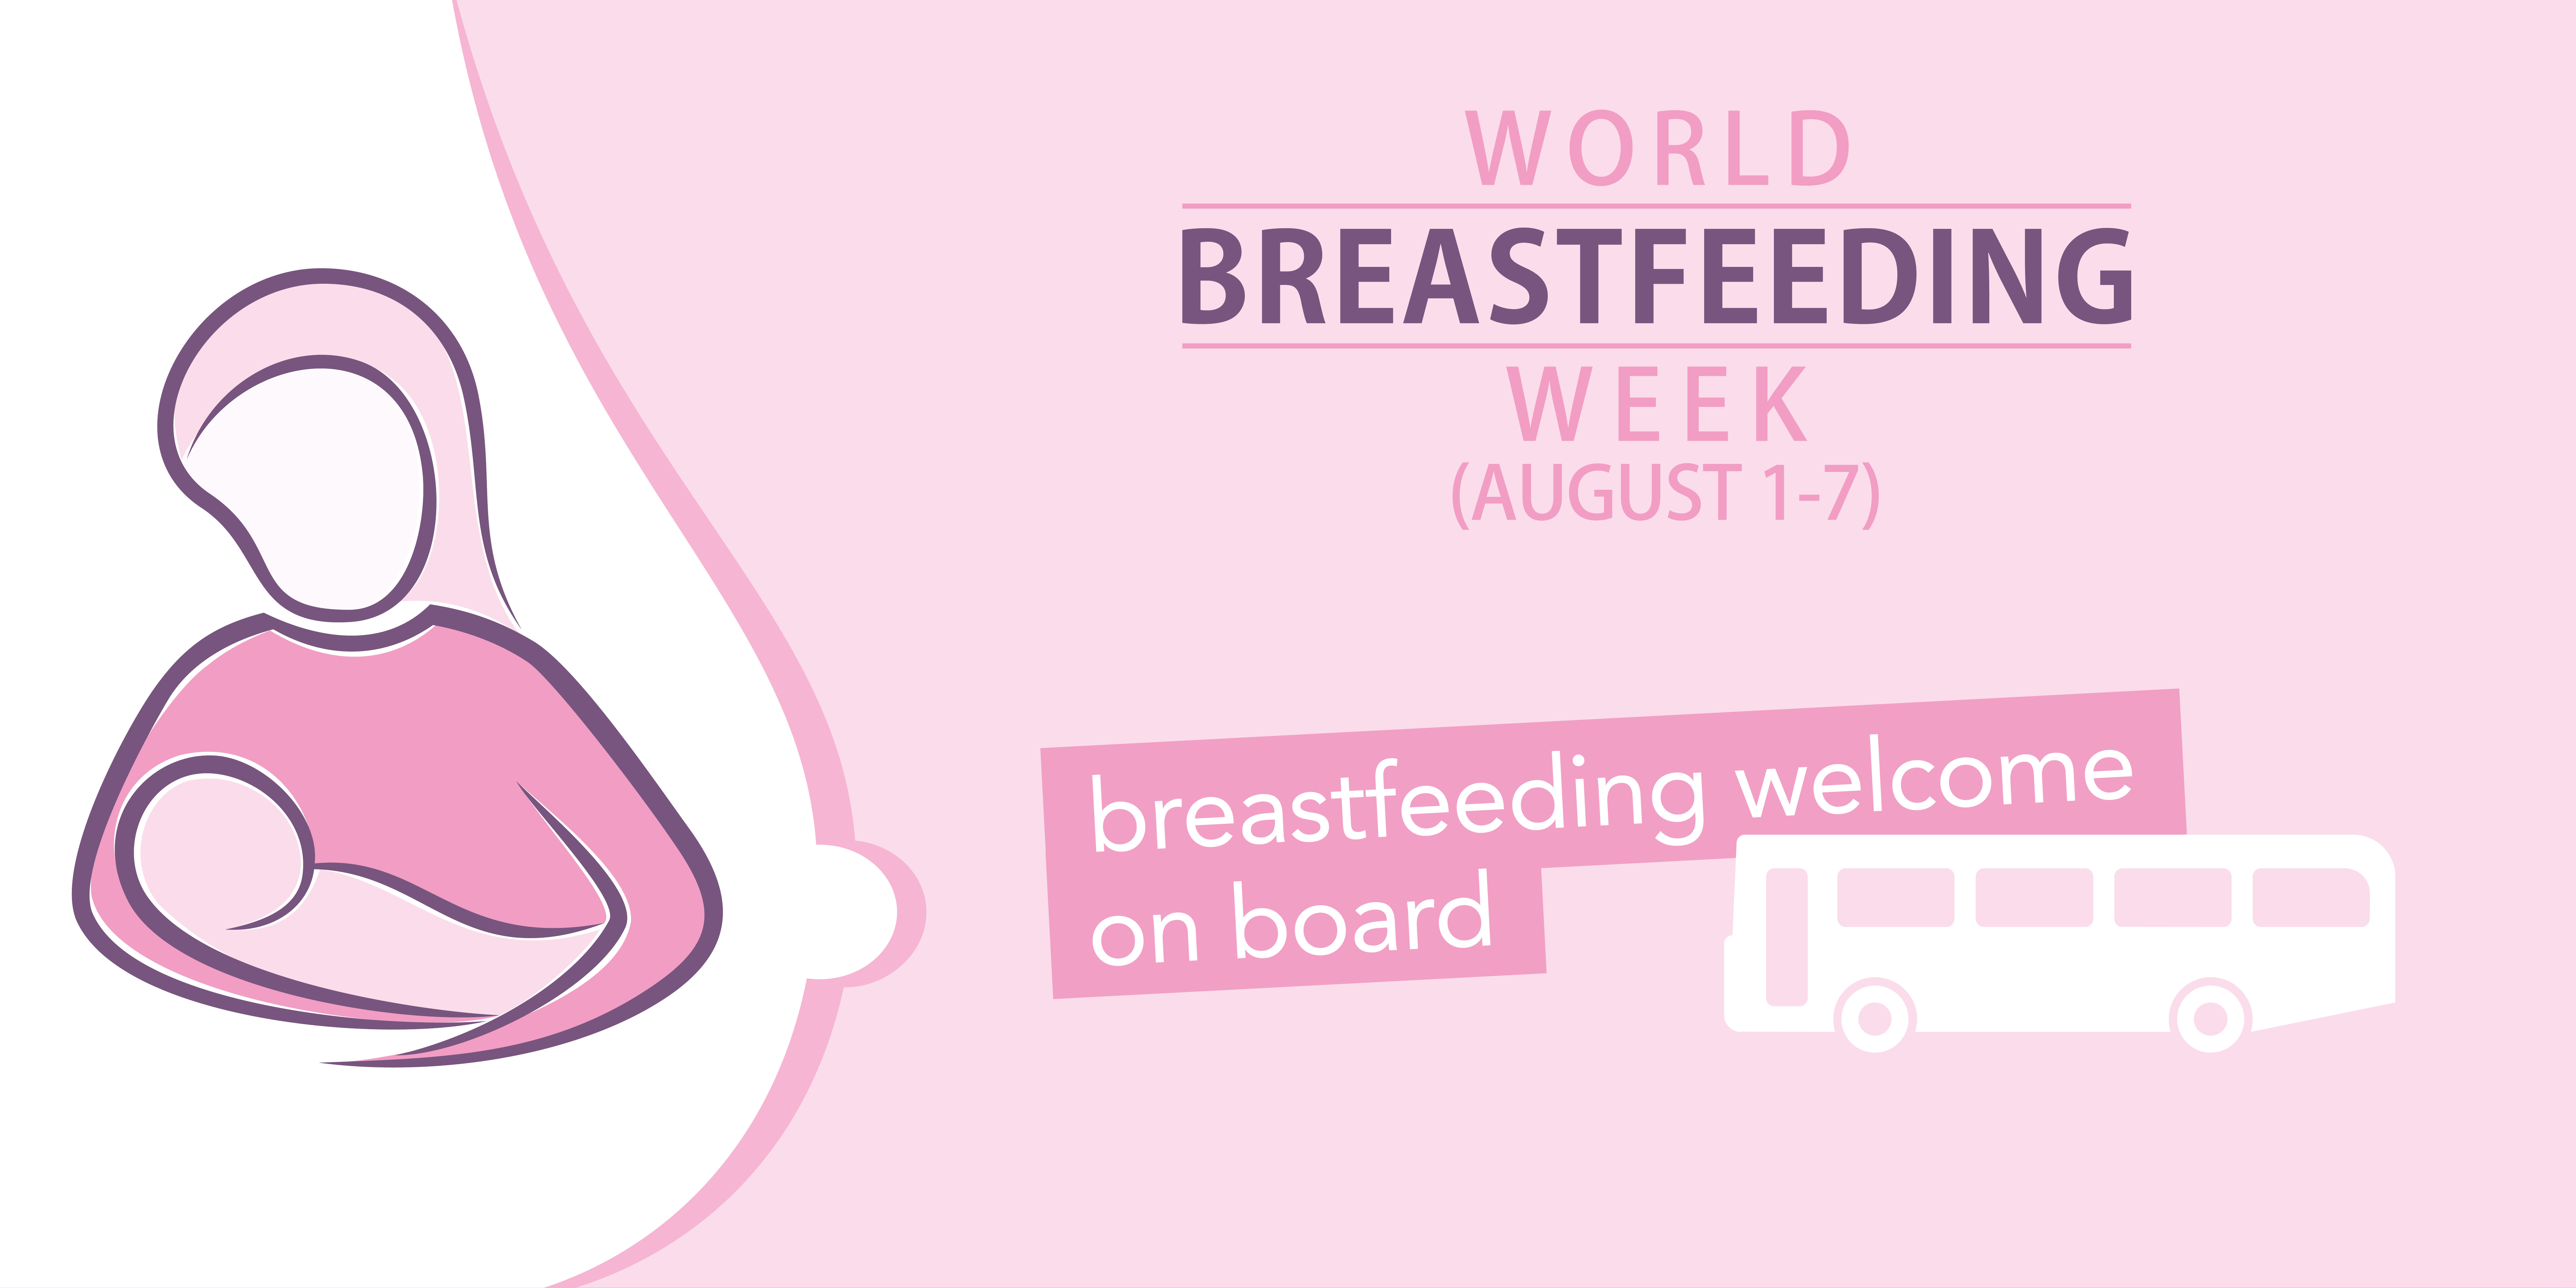 world breastfeeding week 1 - 7 august 